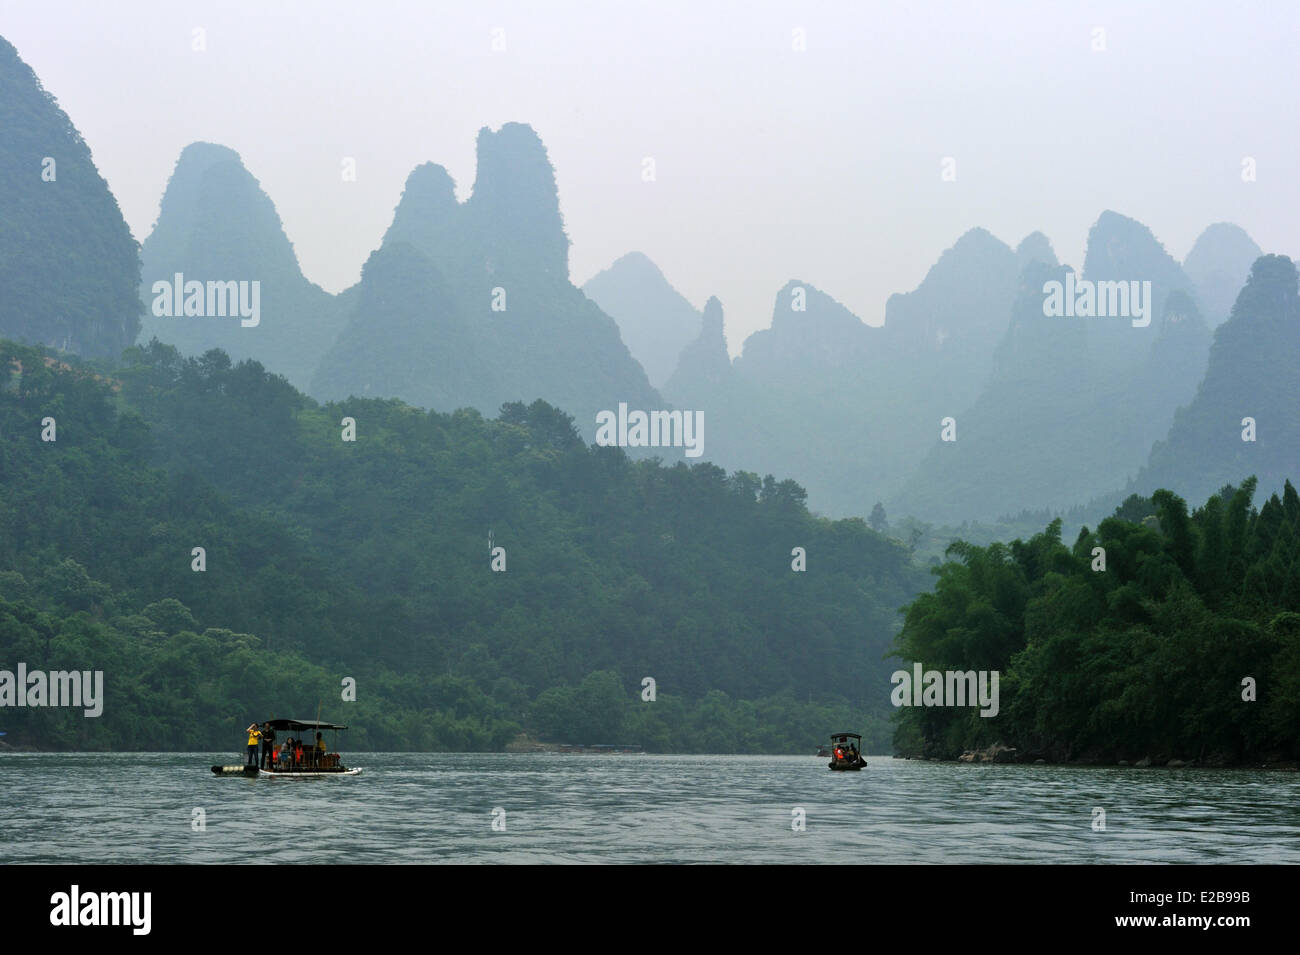 China, Guangxi province, Guilin region, Karst mountain landscape and Li River around Yangshuo Stock Photo